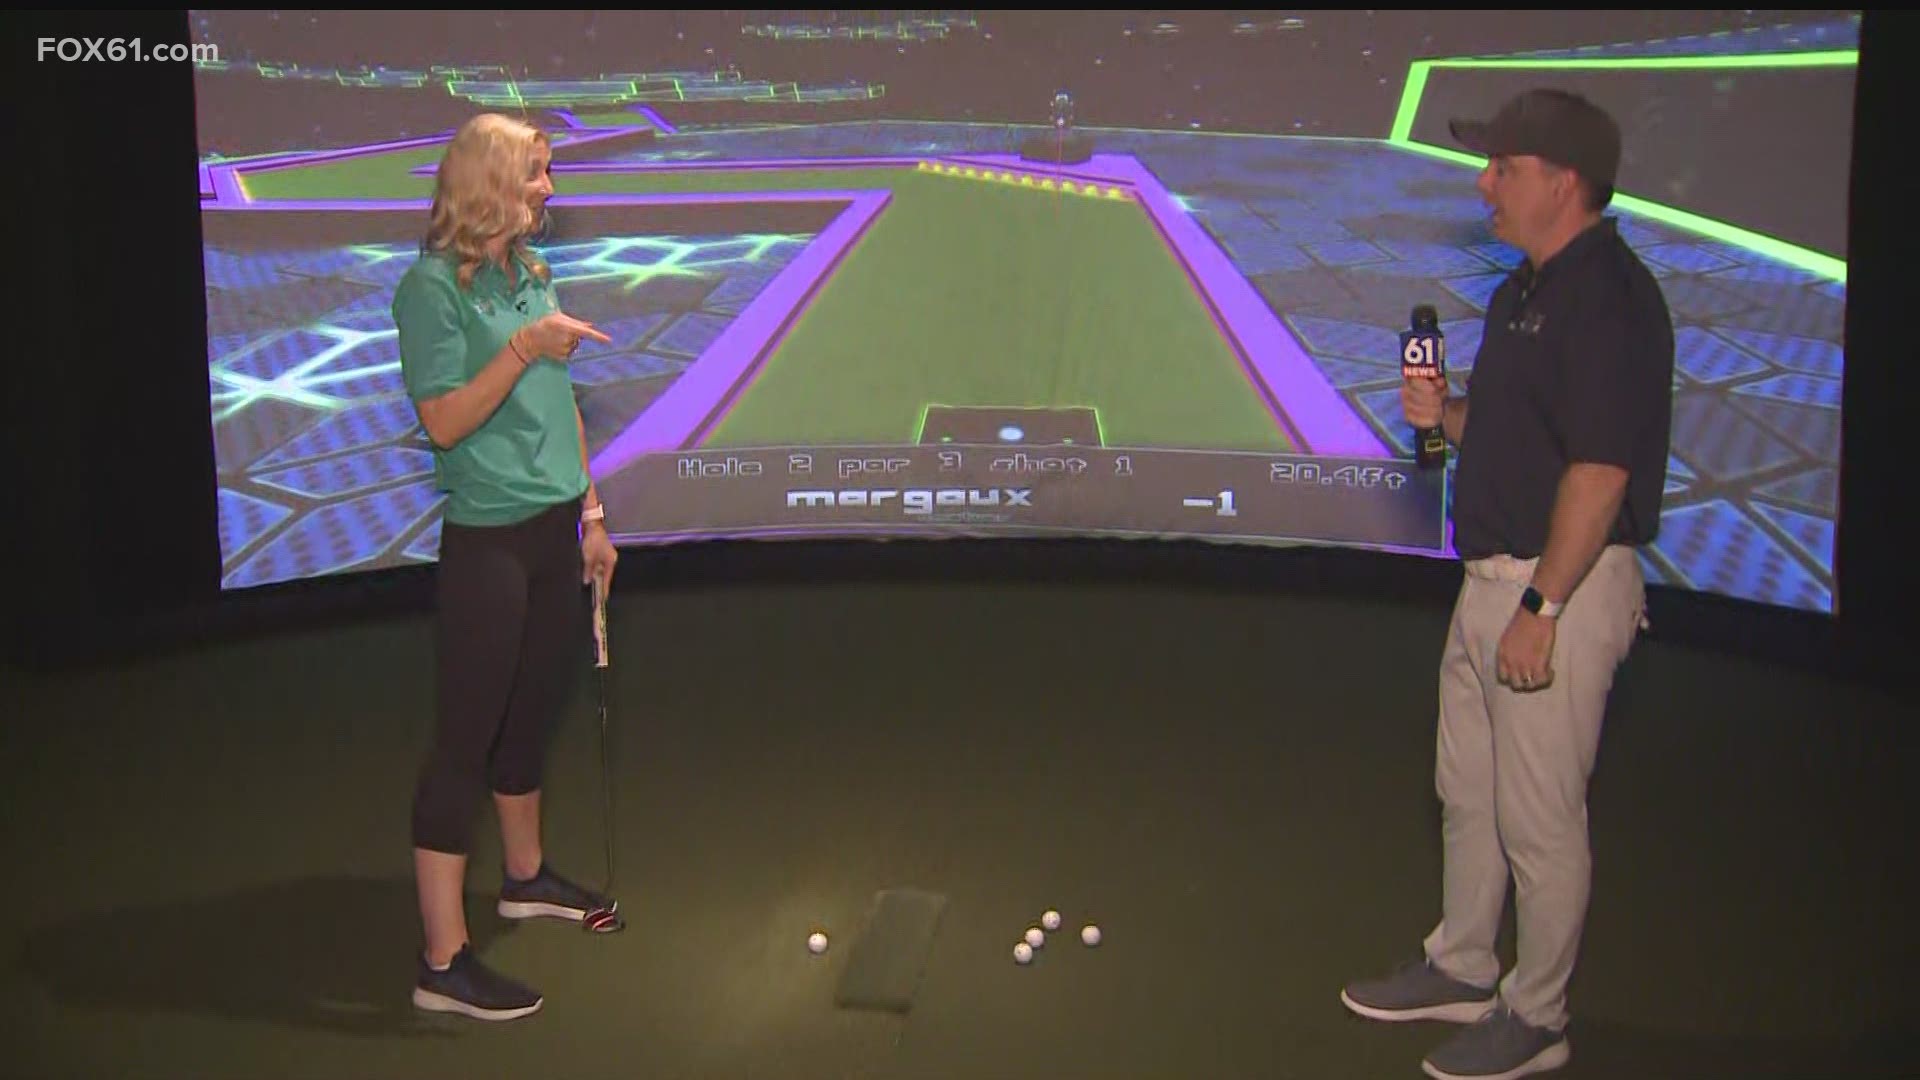 Oakwood Virtual Golf uses virtual reality to provide a realistic golfing experience inside.